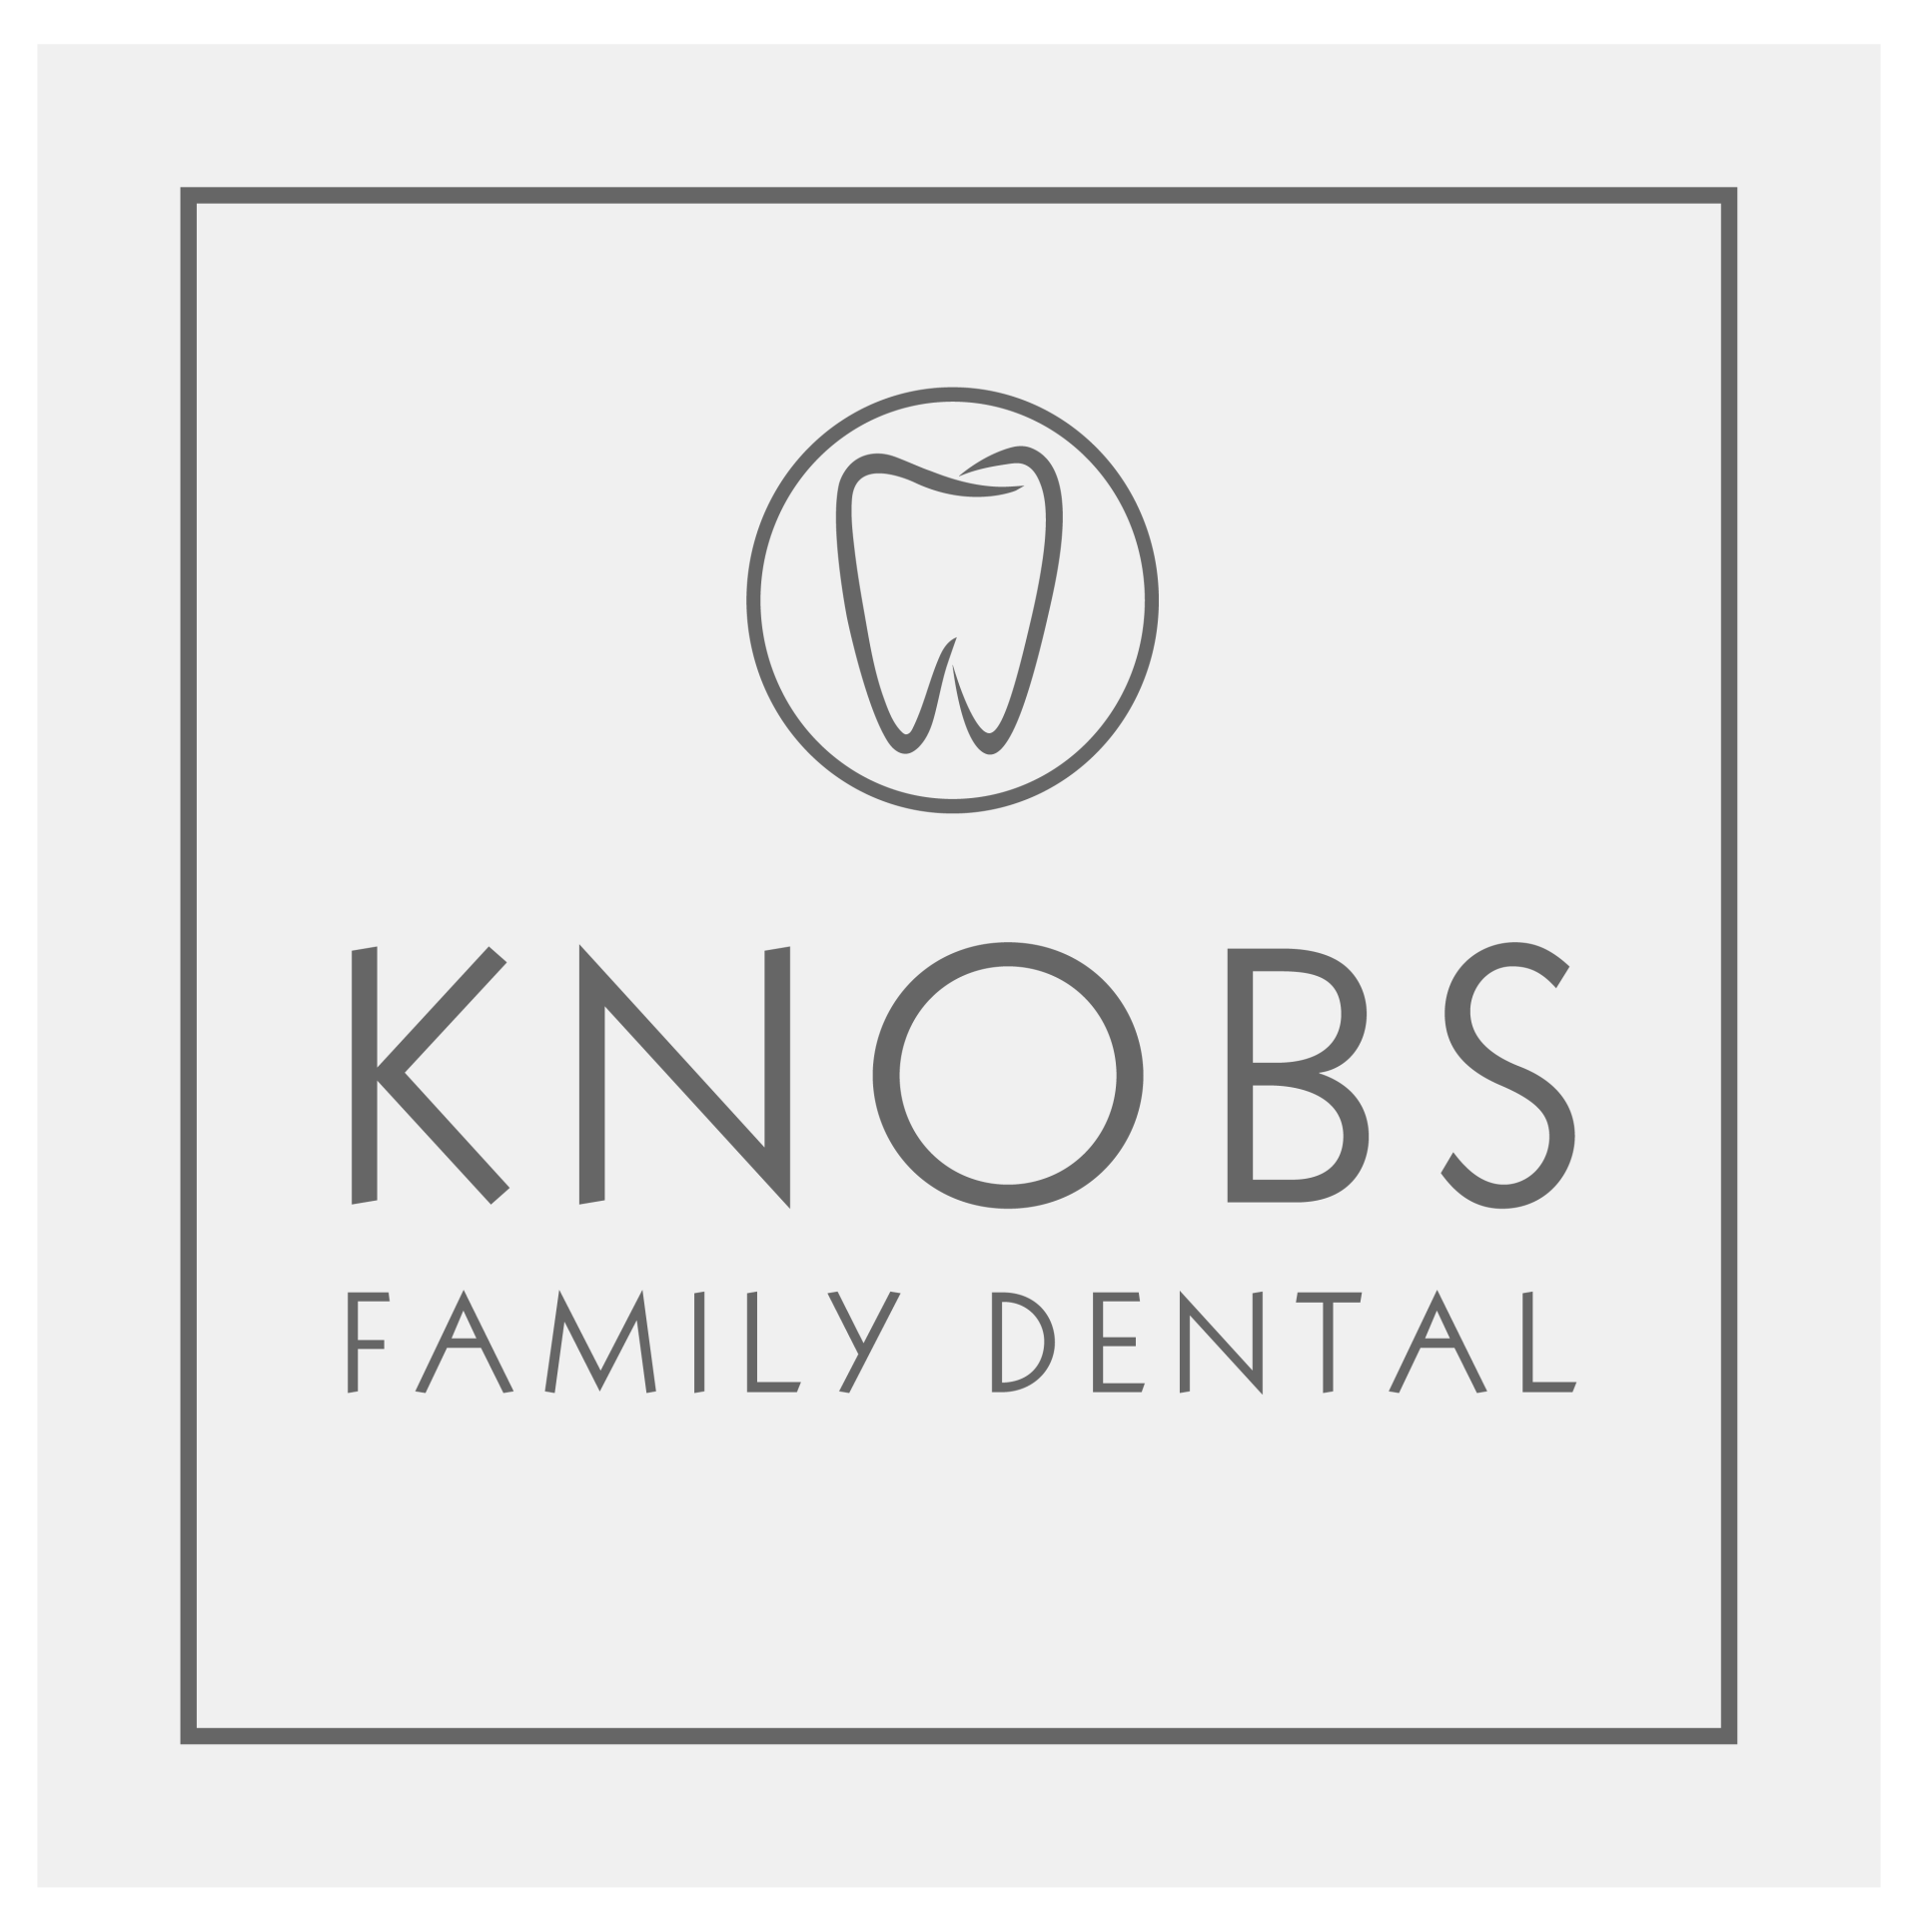 Knobs Family Dental